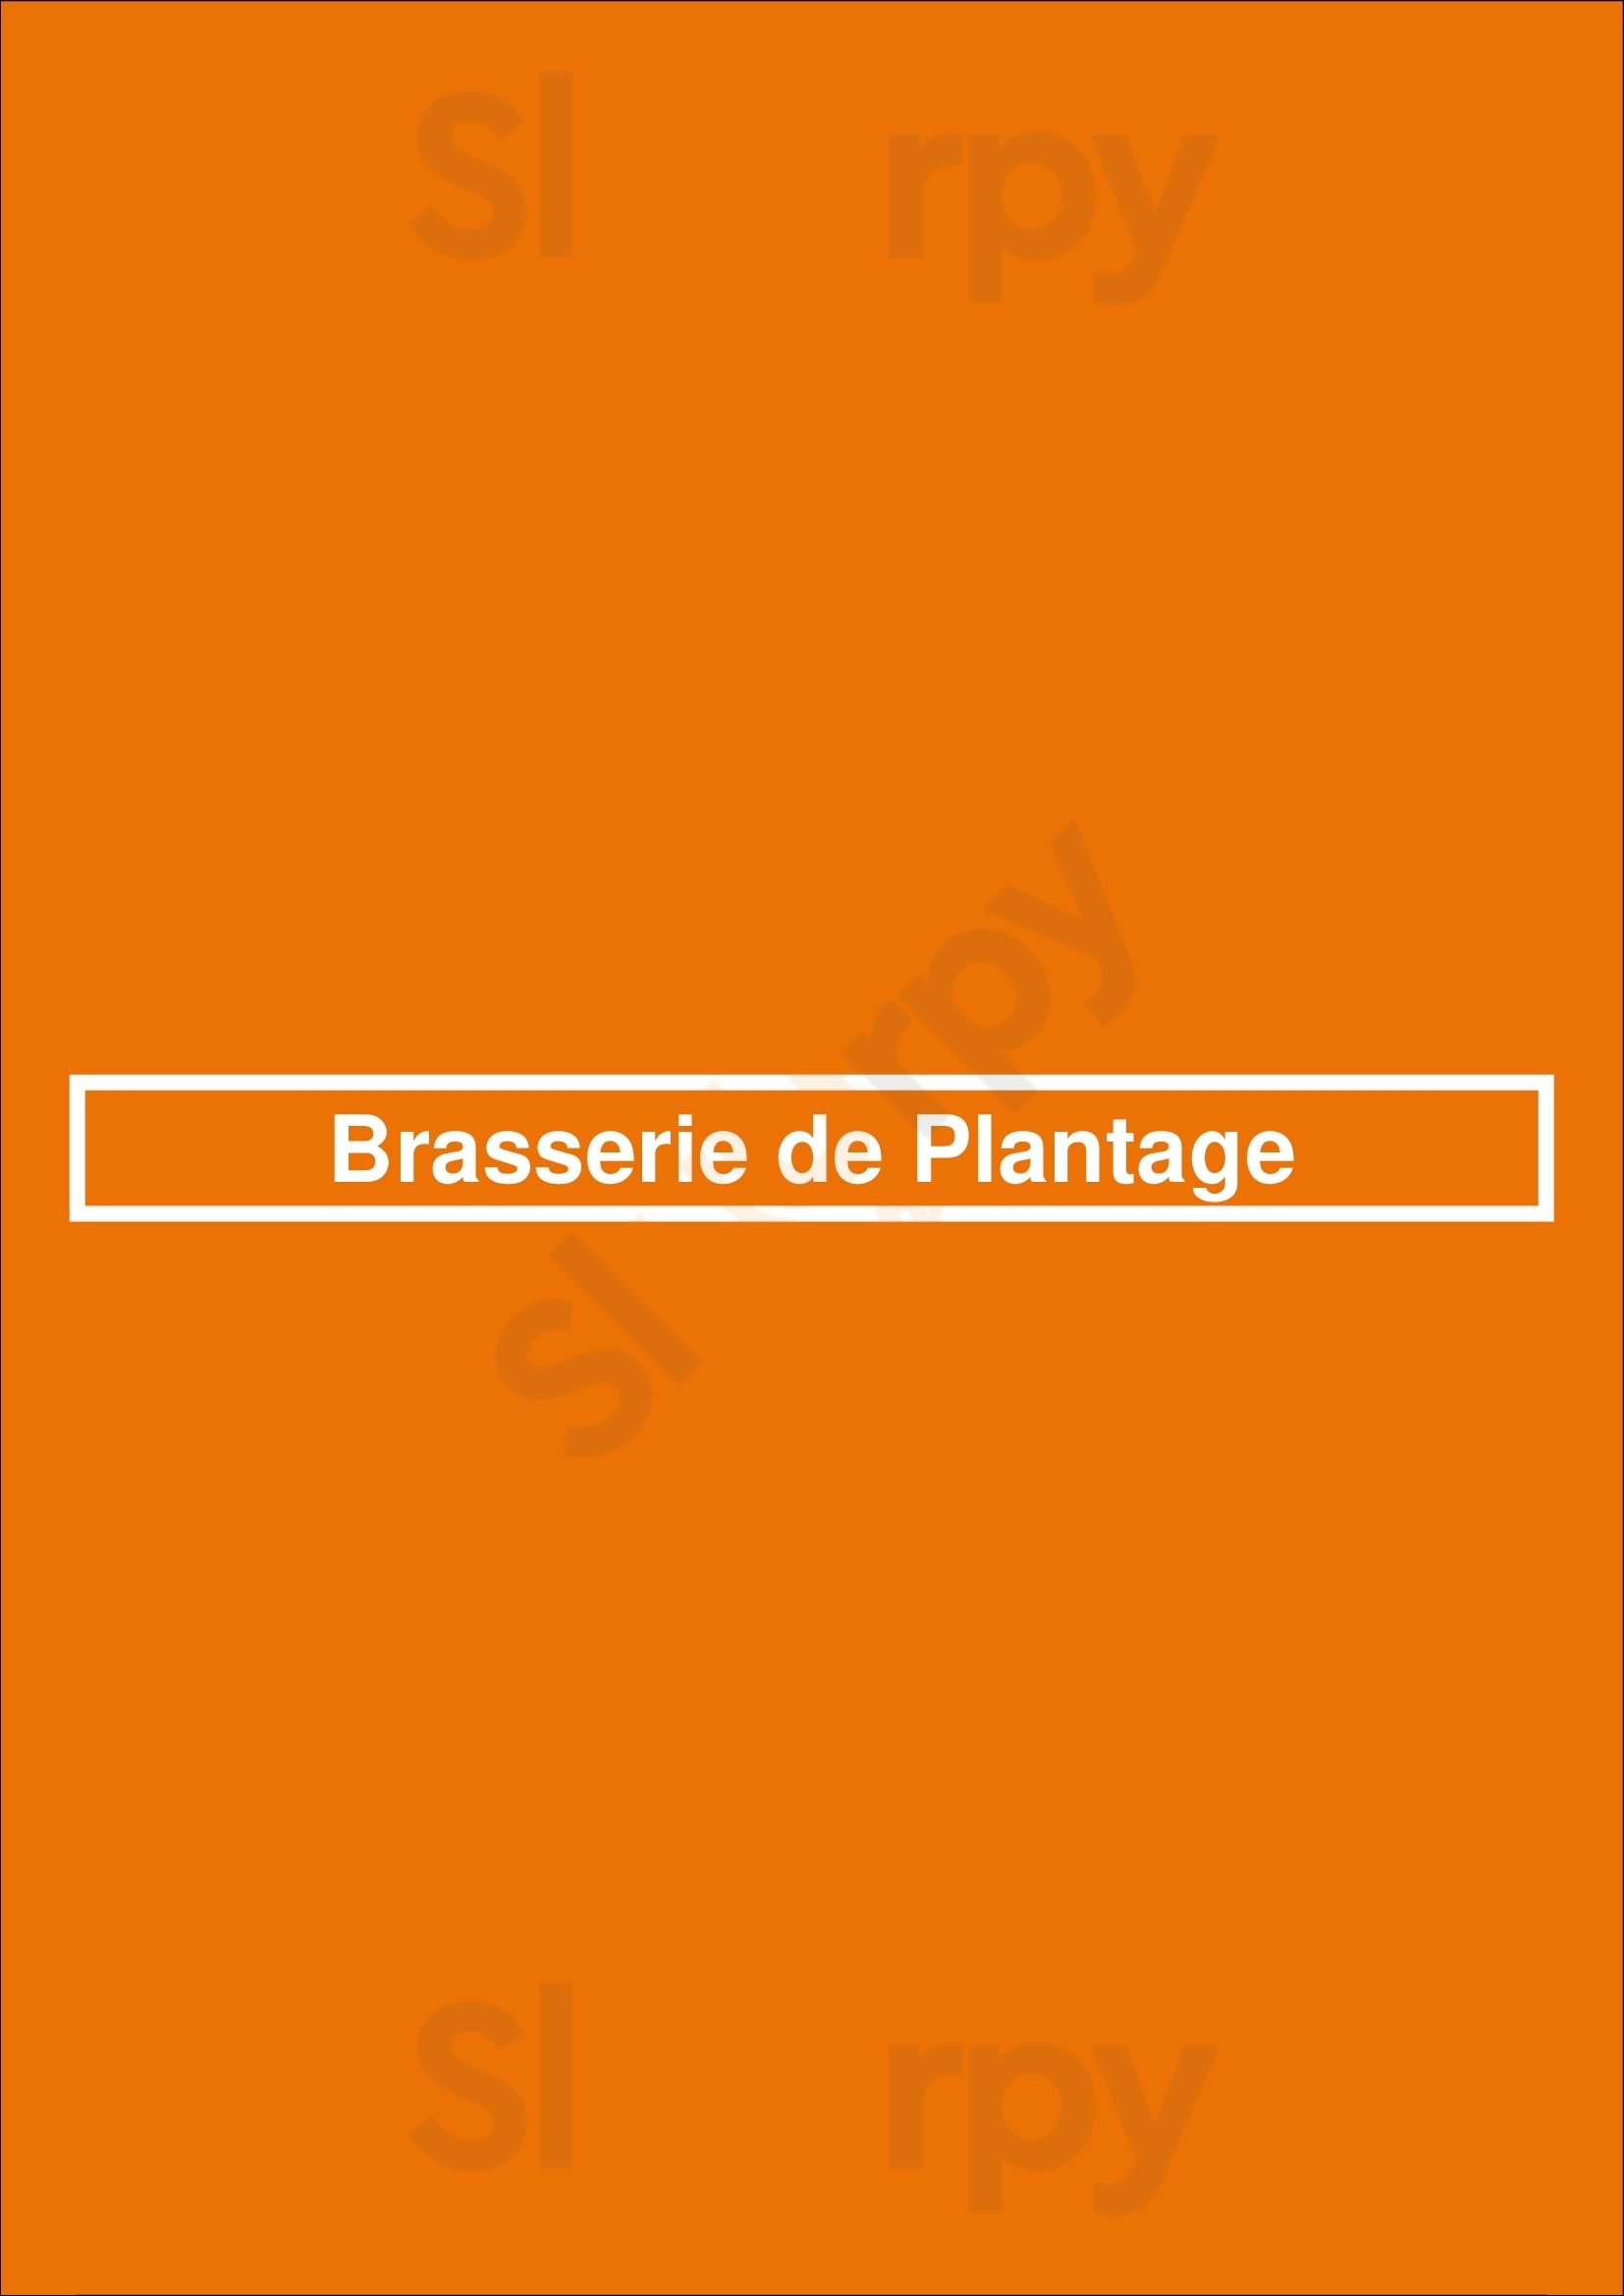 Brasserie De Plantage Veenendaal Menu - 1